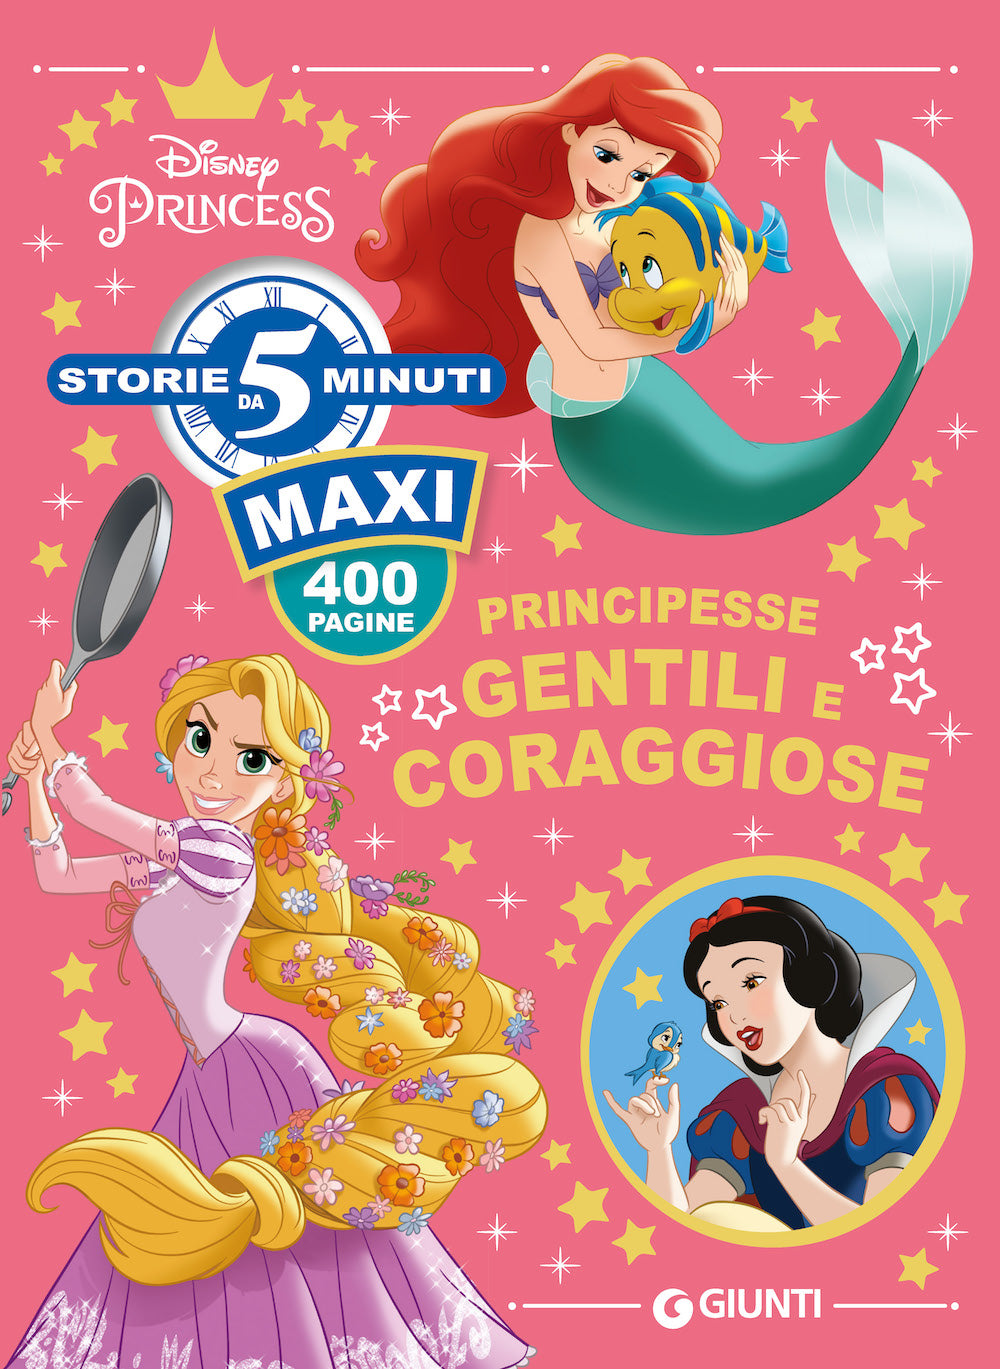 Principesse gentili e coraggiose - Storie da 5 minuti MAXI::400 Pagine - Disney Princess